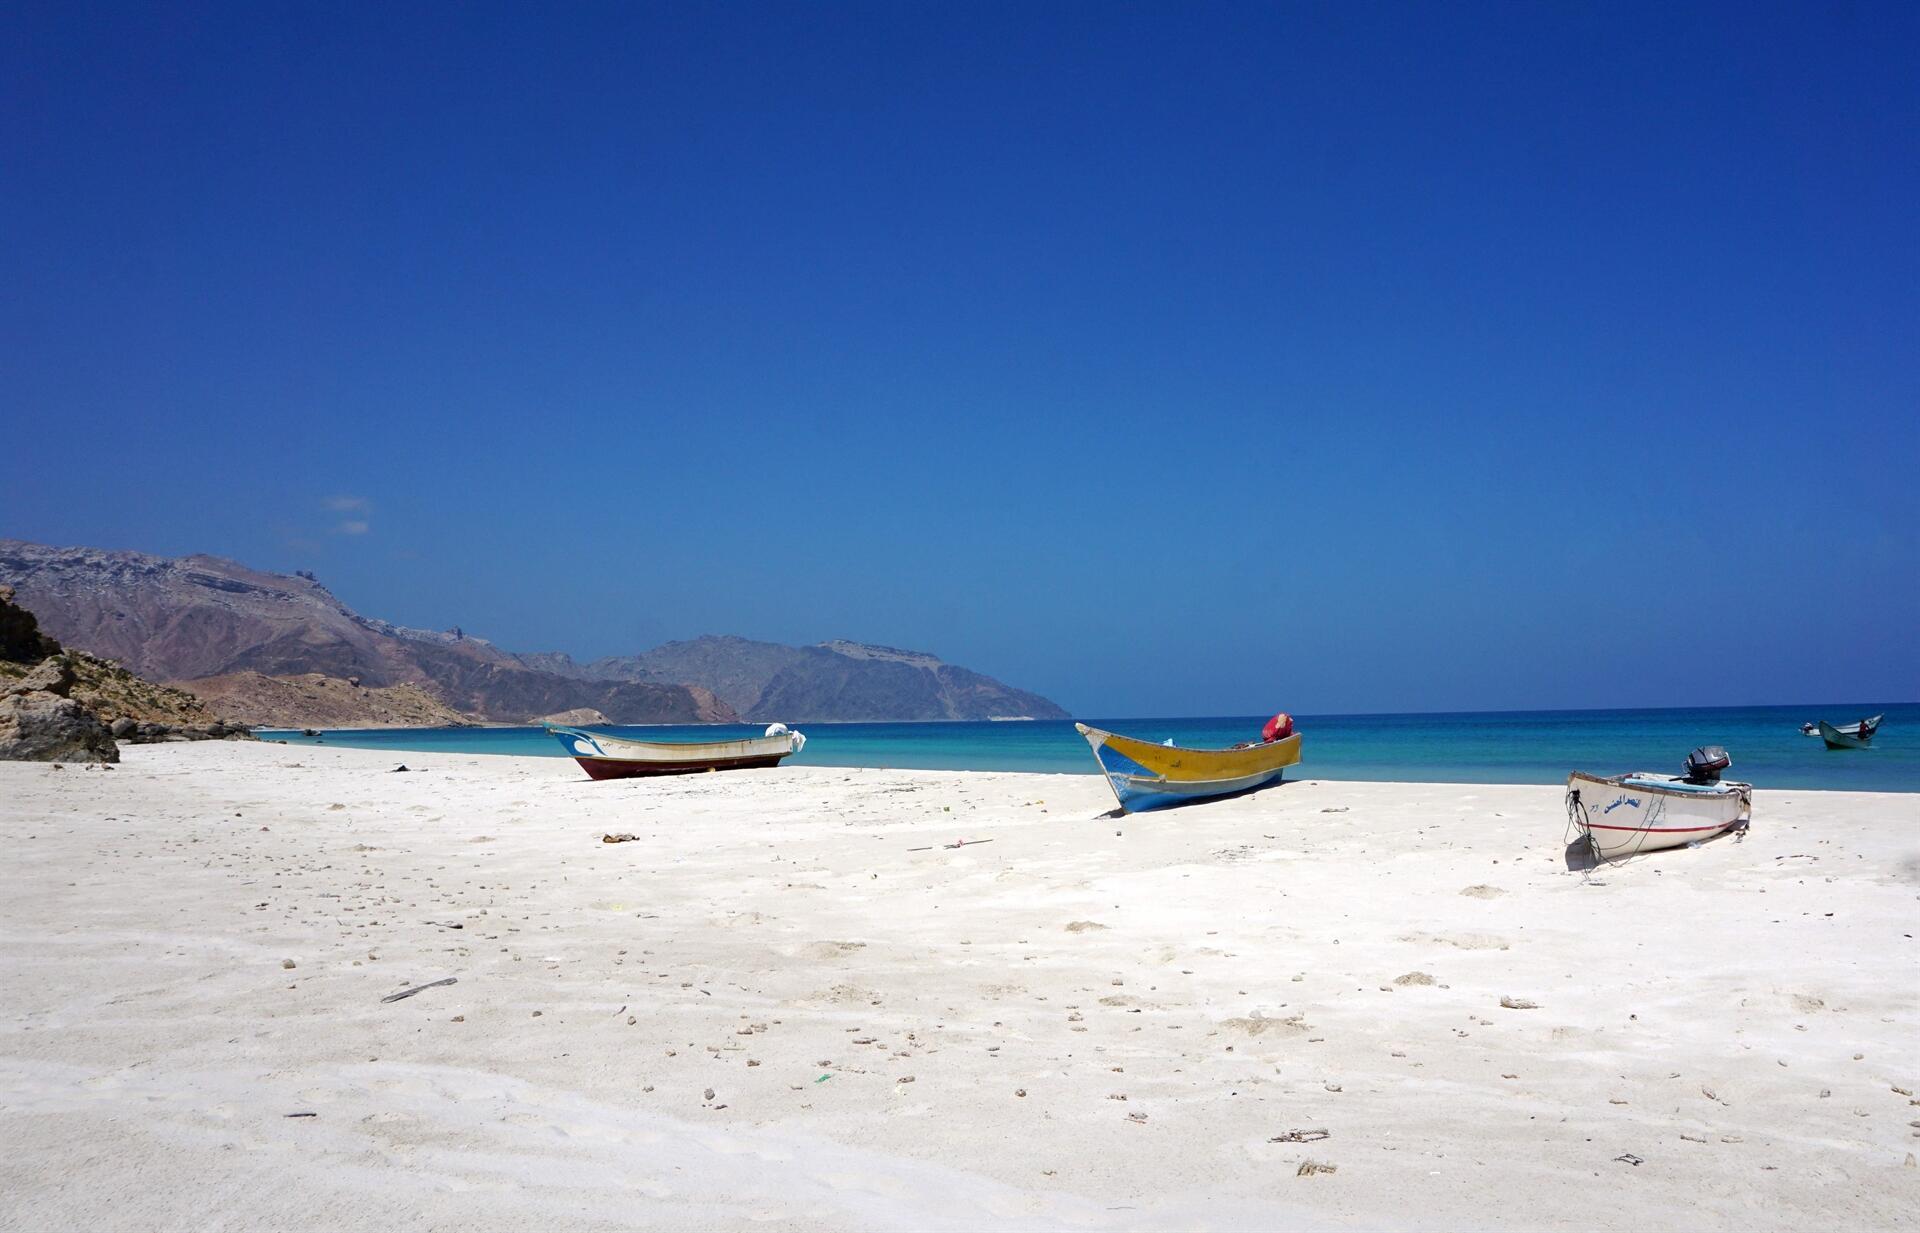 Yemen’s Socotra, isolated island at strategic crossroads